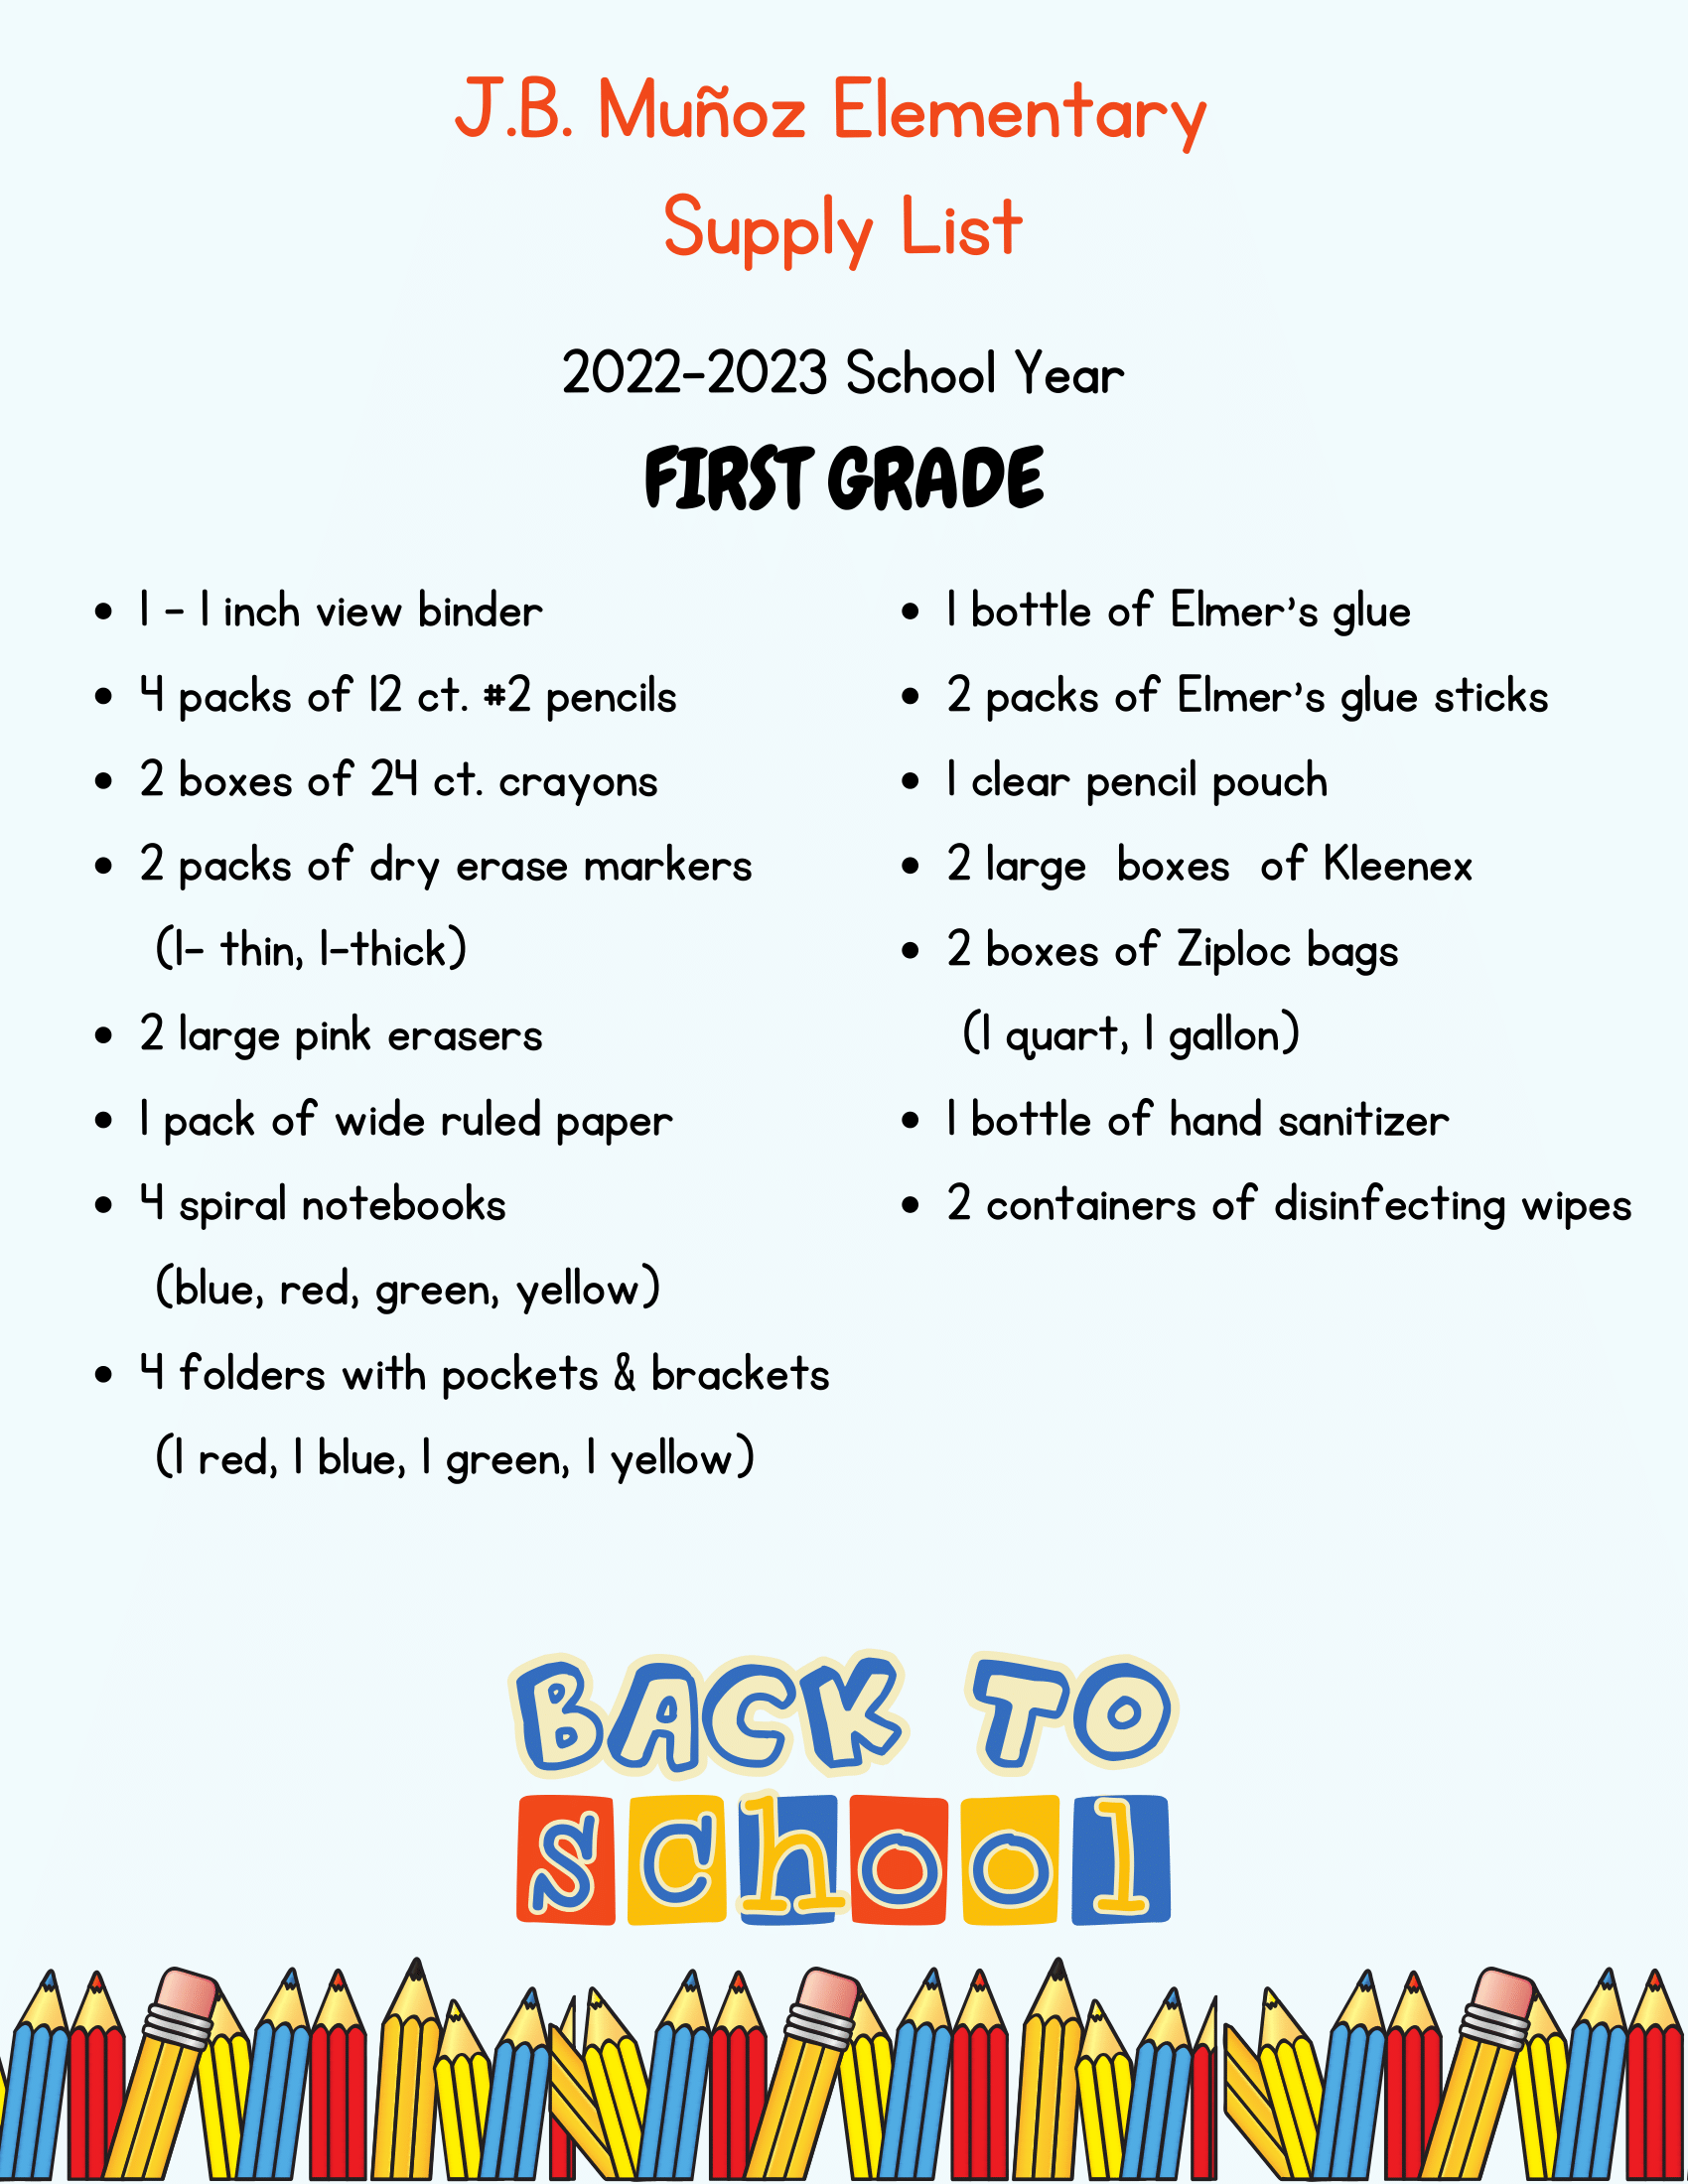 First grade school supply list